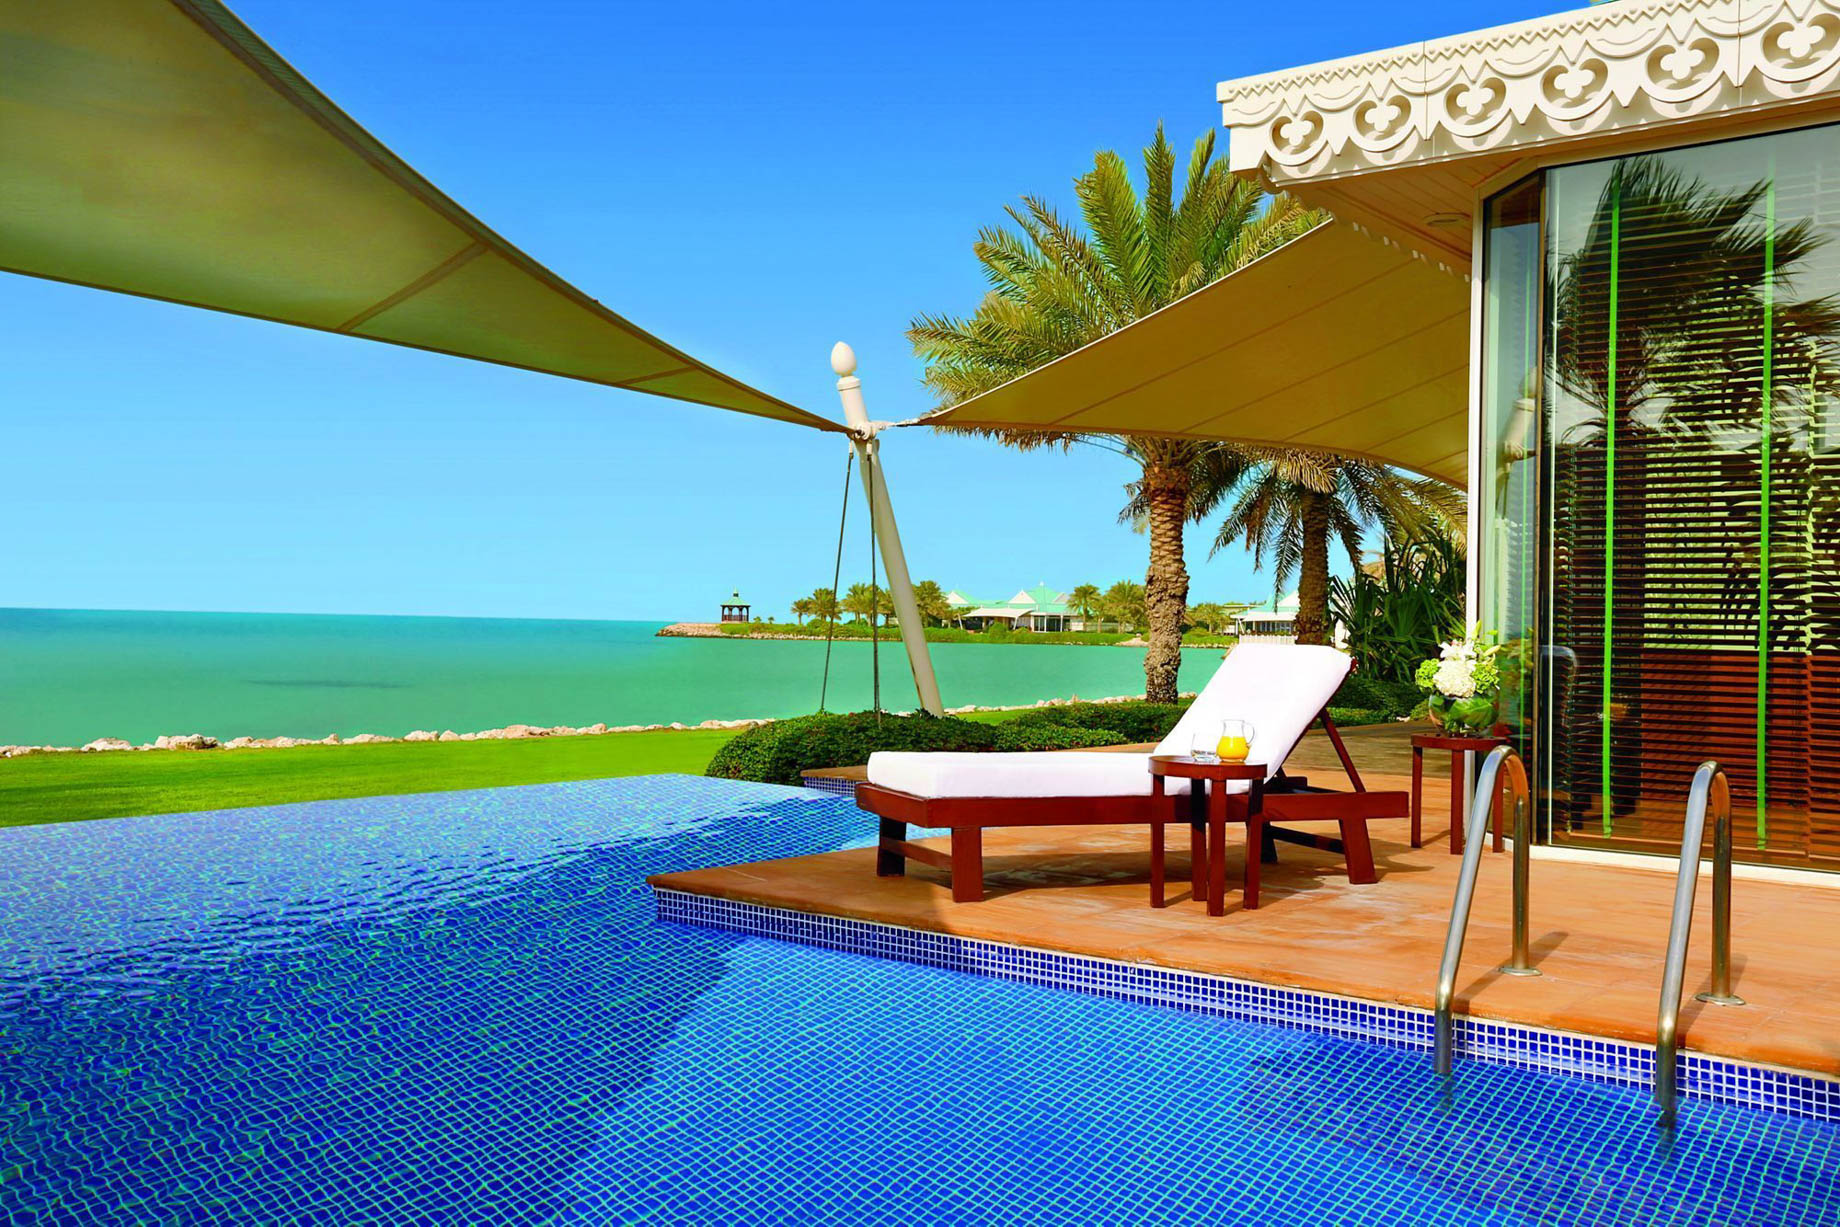 The Ritz-Carlton, Bahrain Resort Hotel - Manama, Bahrain - Villa Pool Deck Ocean View